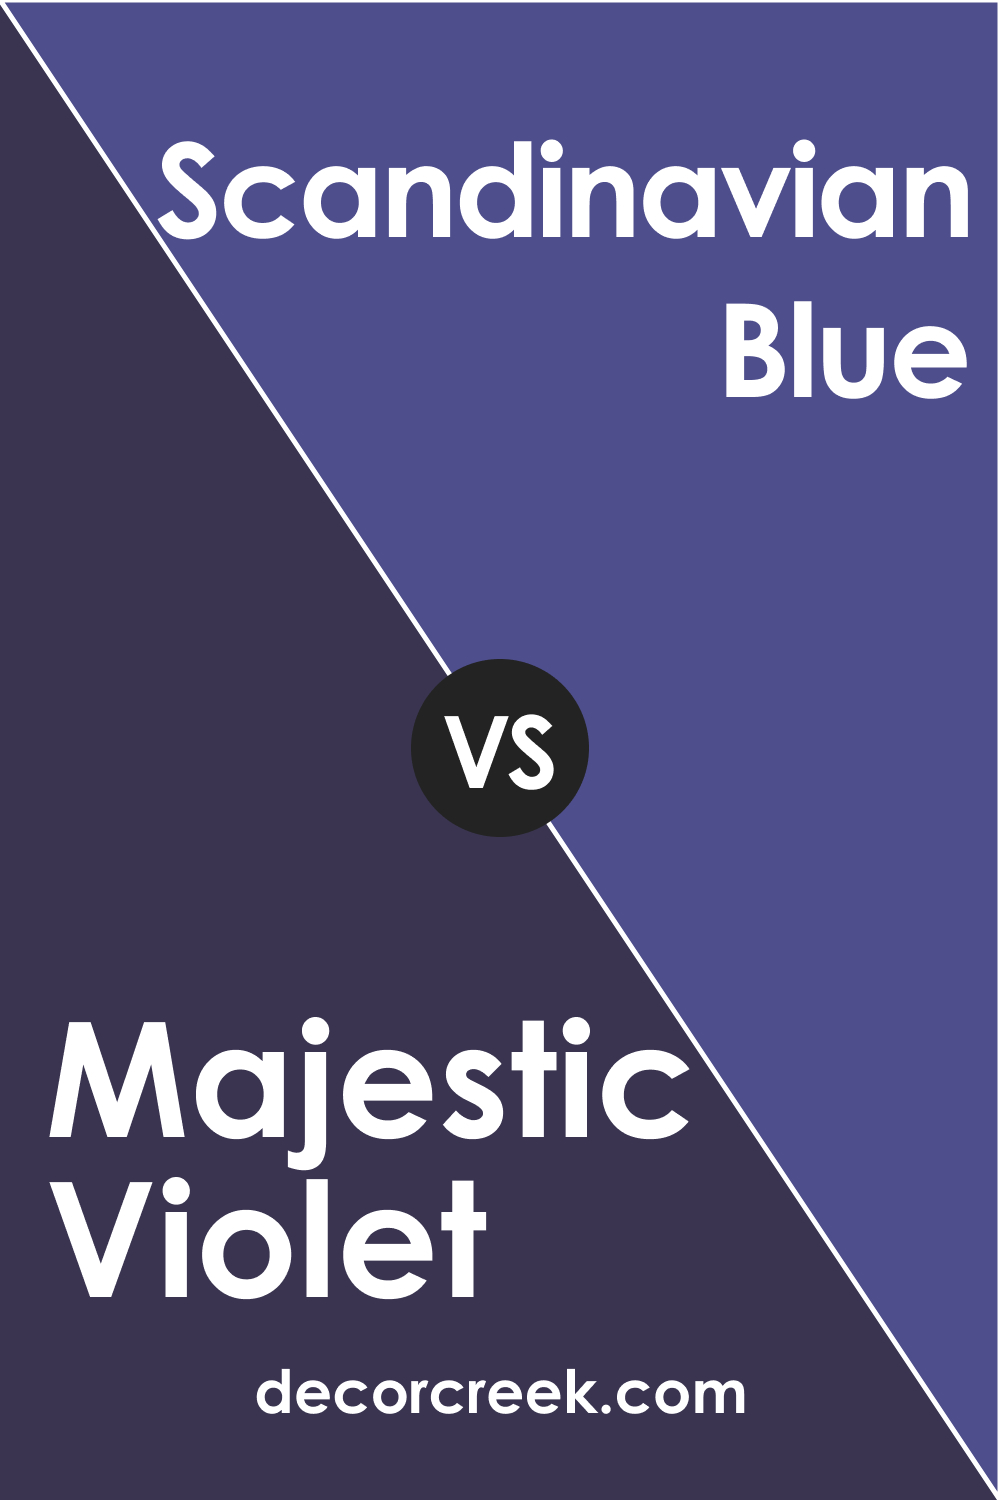 Majestic Violet 2068-10 vs. BM 2068-30 Scandinavian Blue